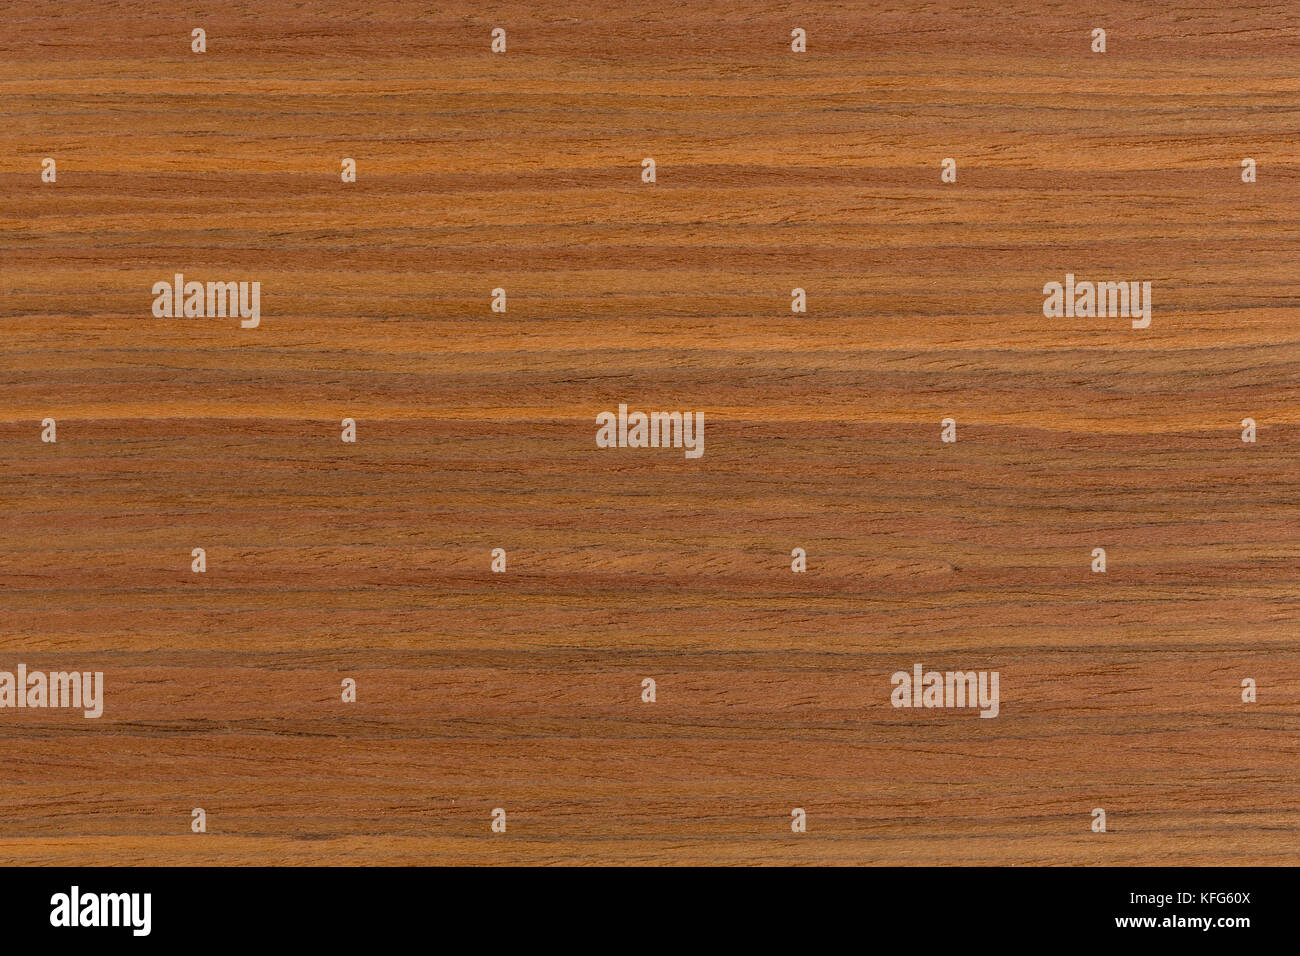 Rosewood veneer texture, natural wooden backghound. Stock Photo